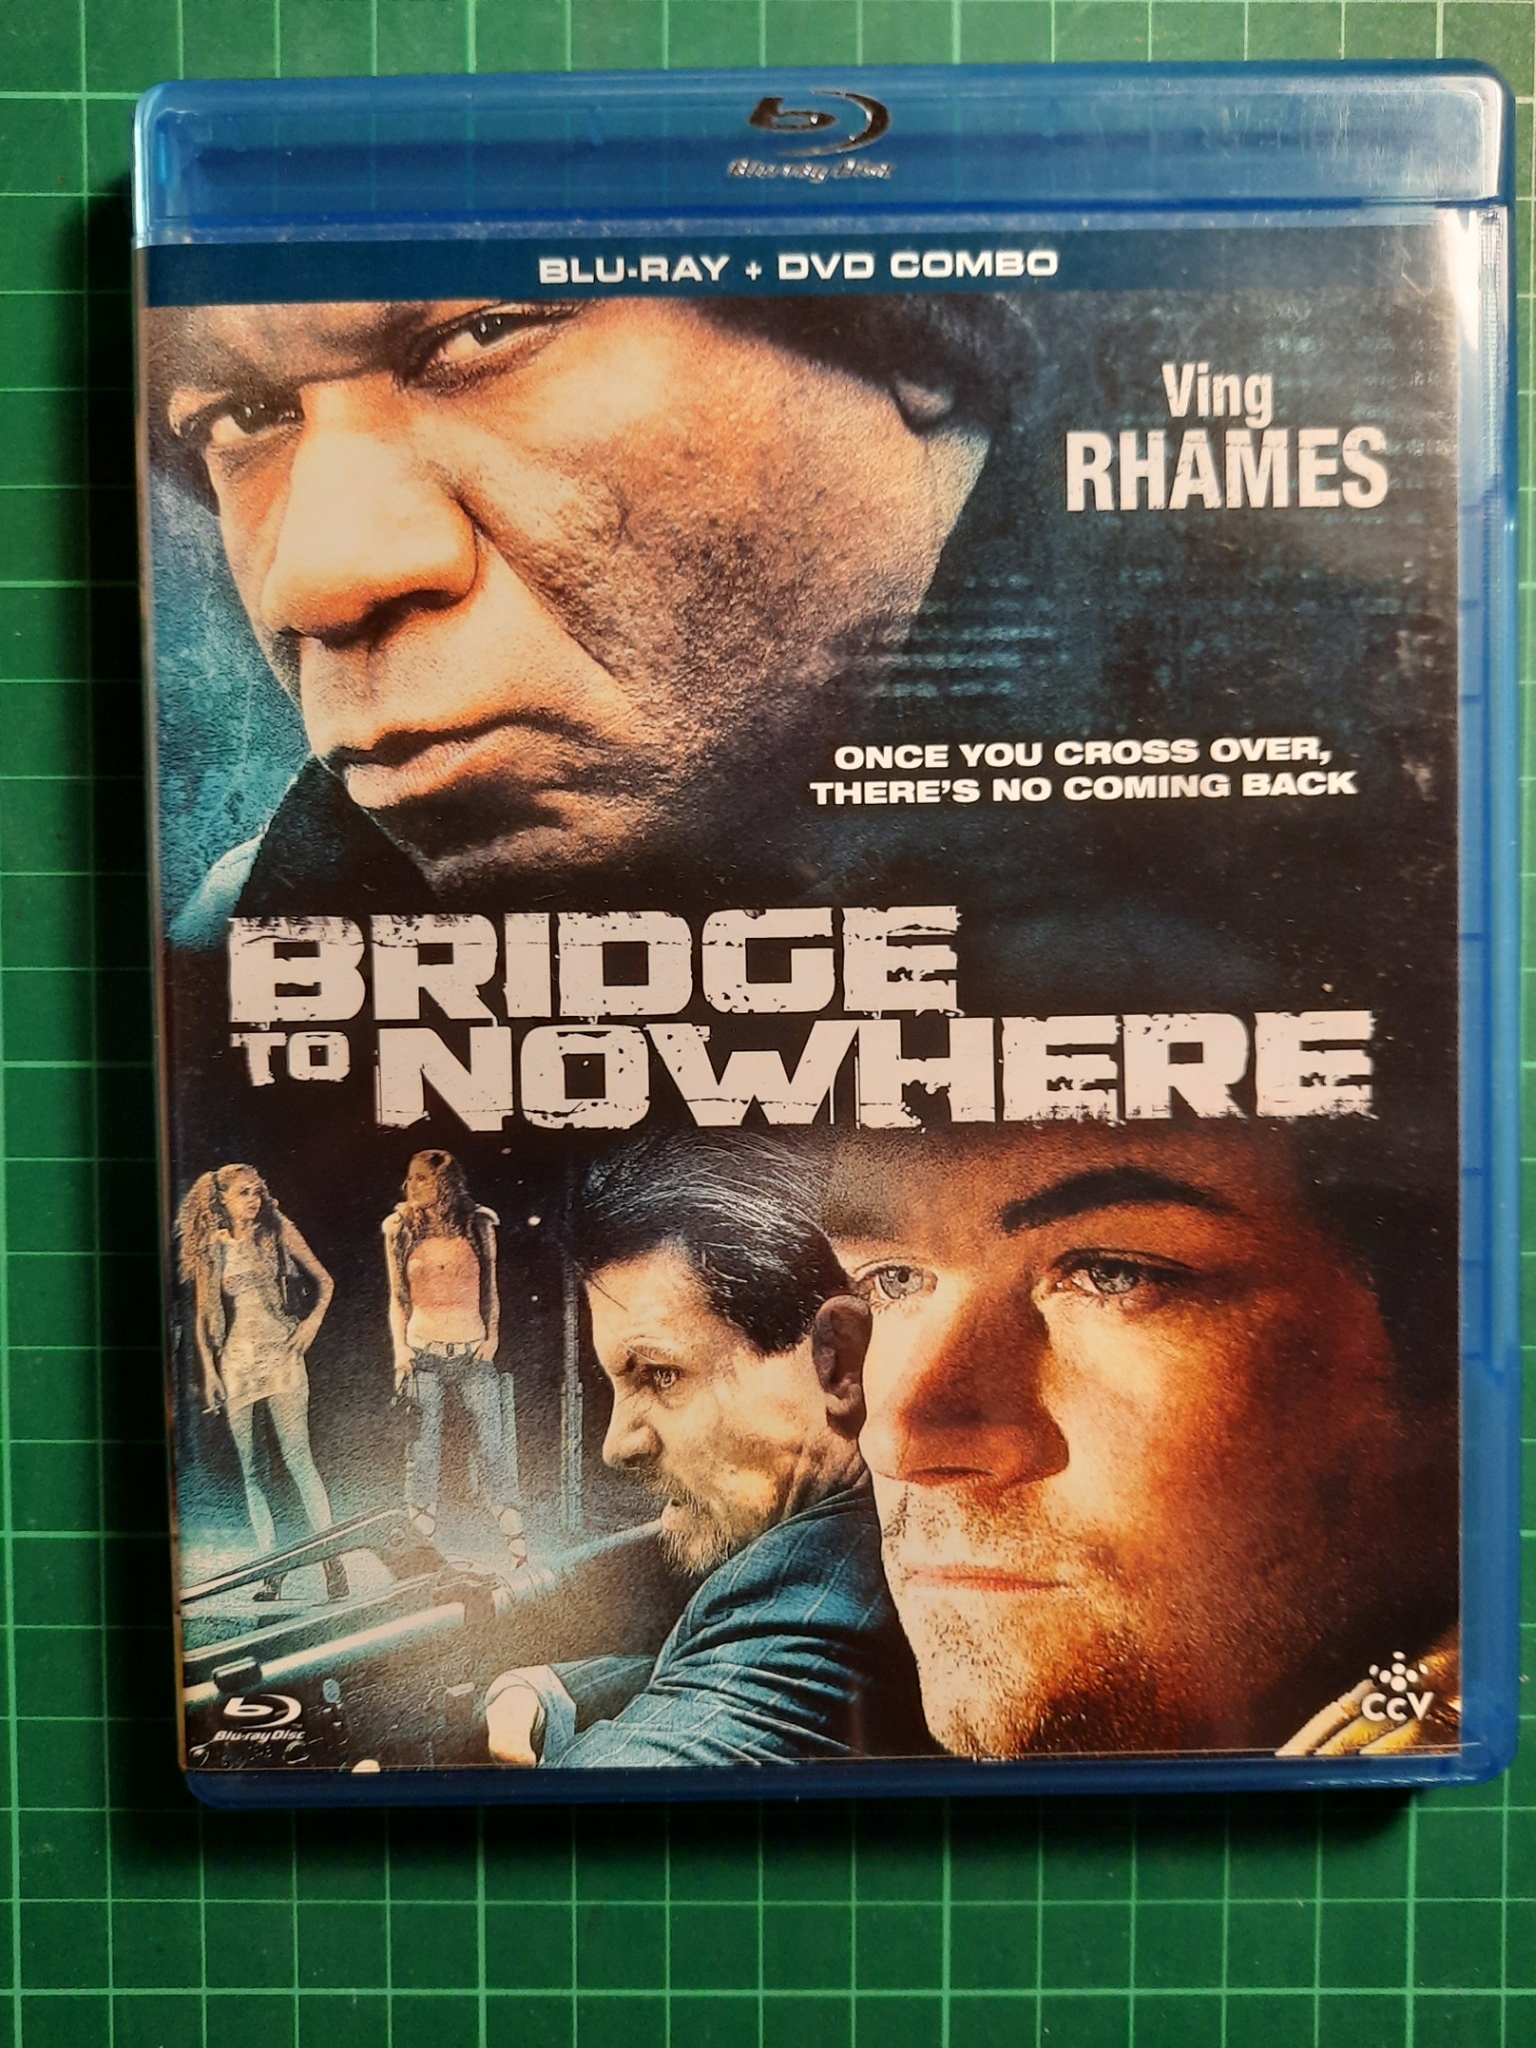 Blu-ray : Bridge to nowhere